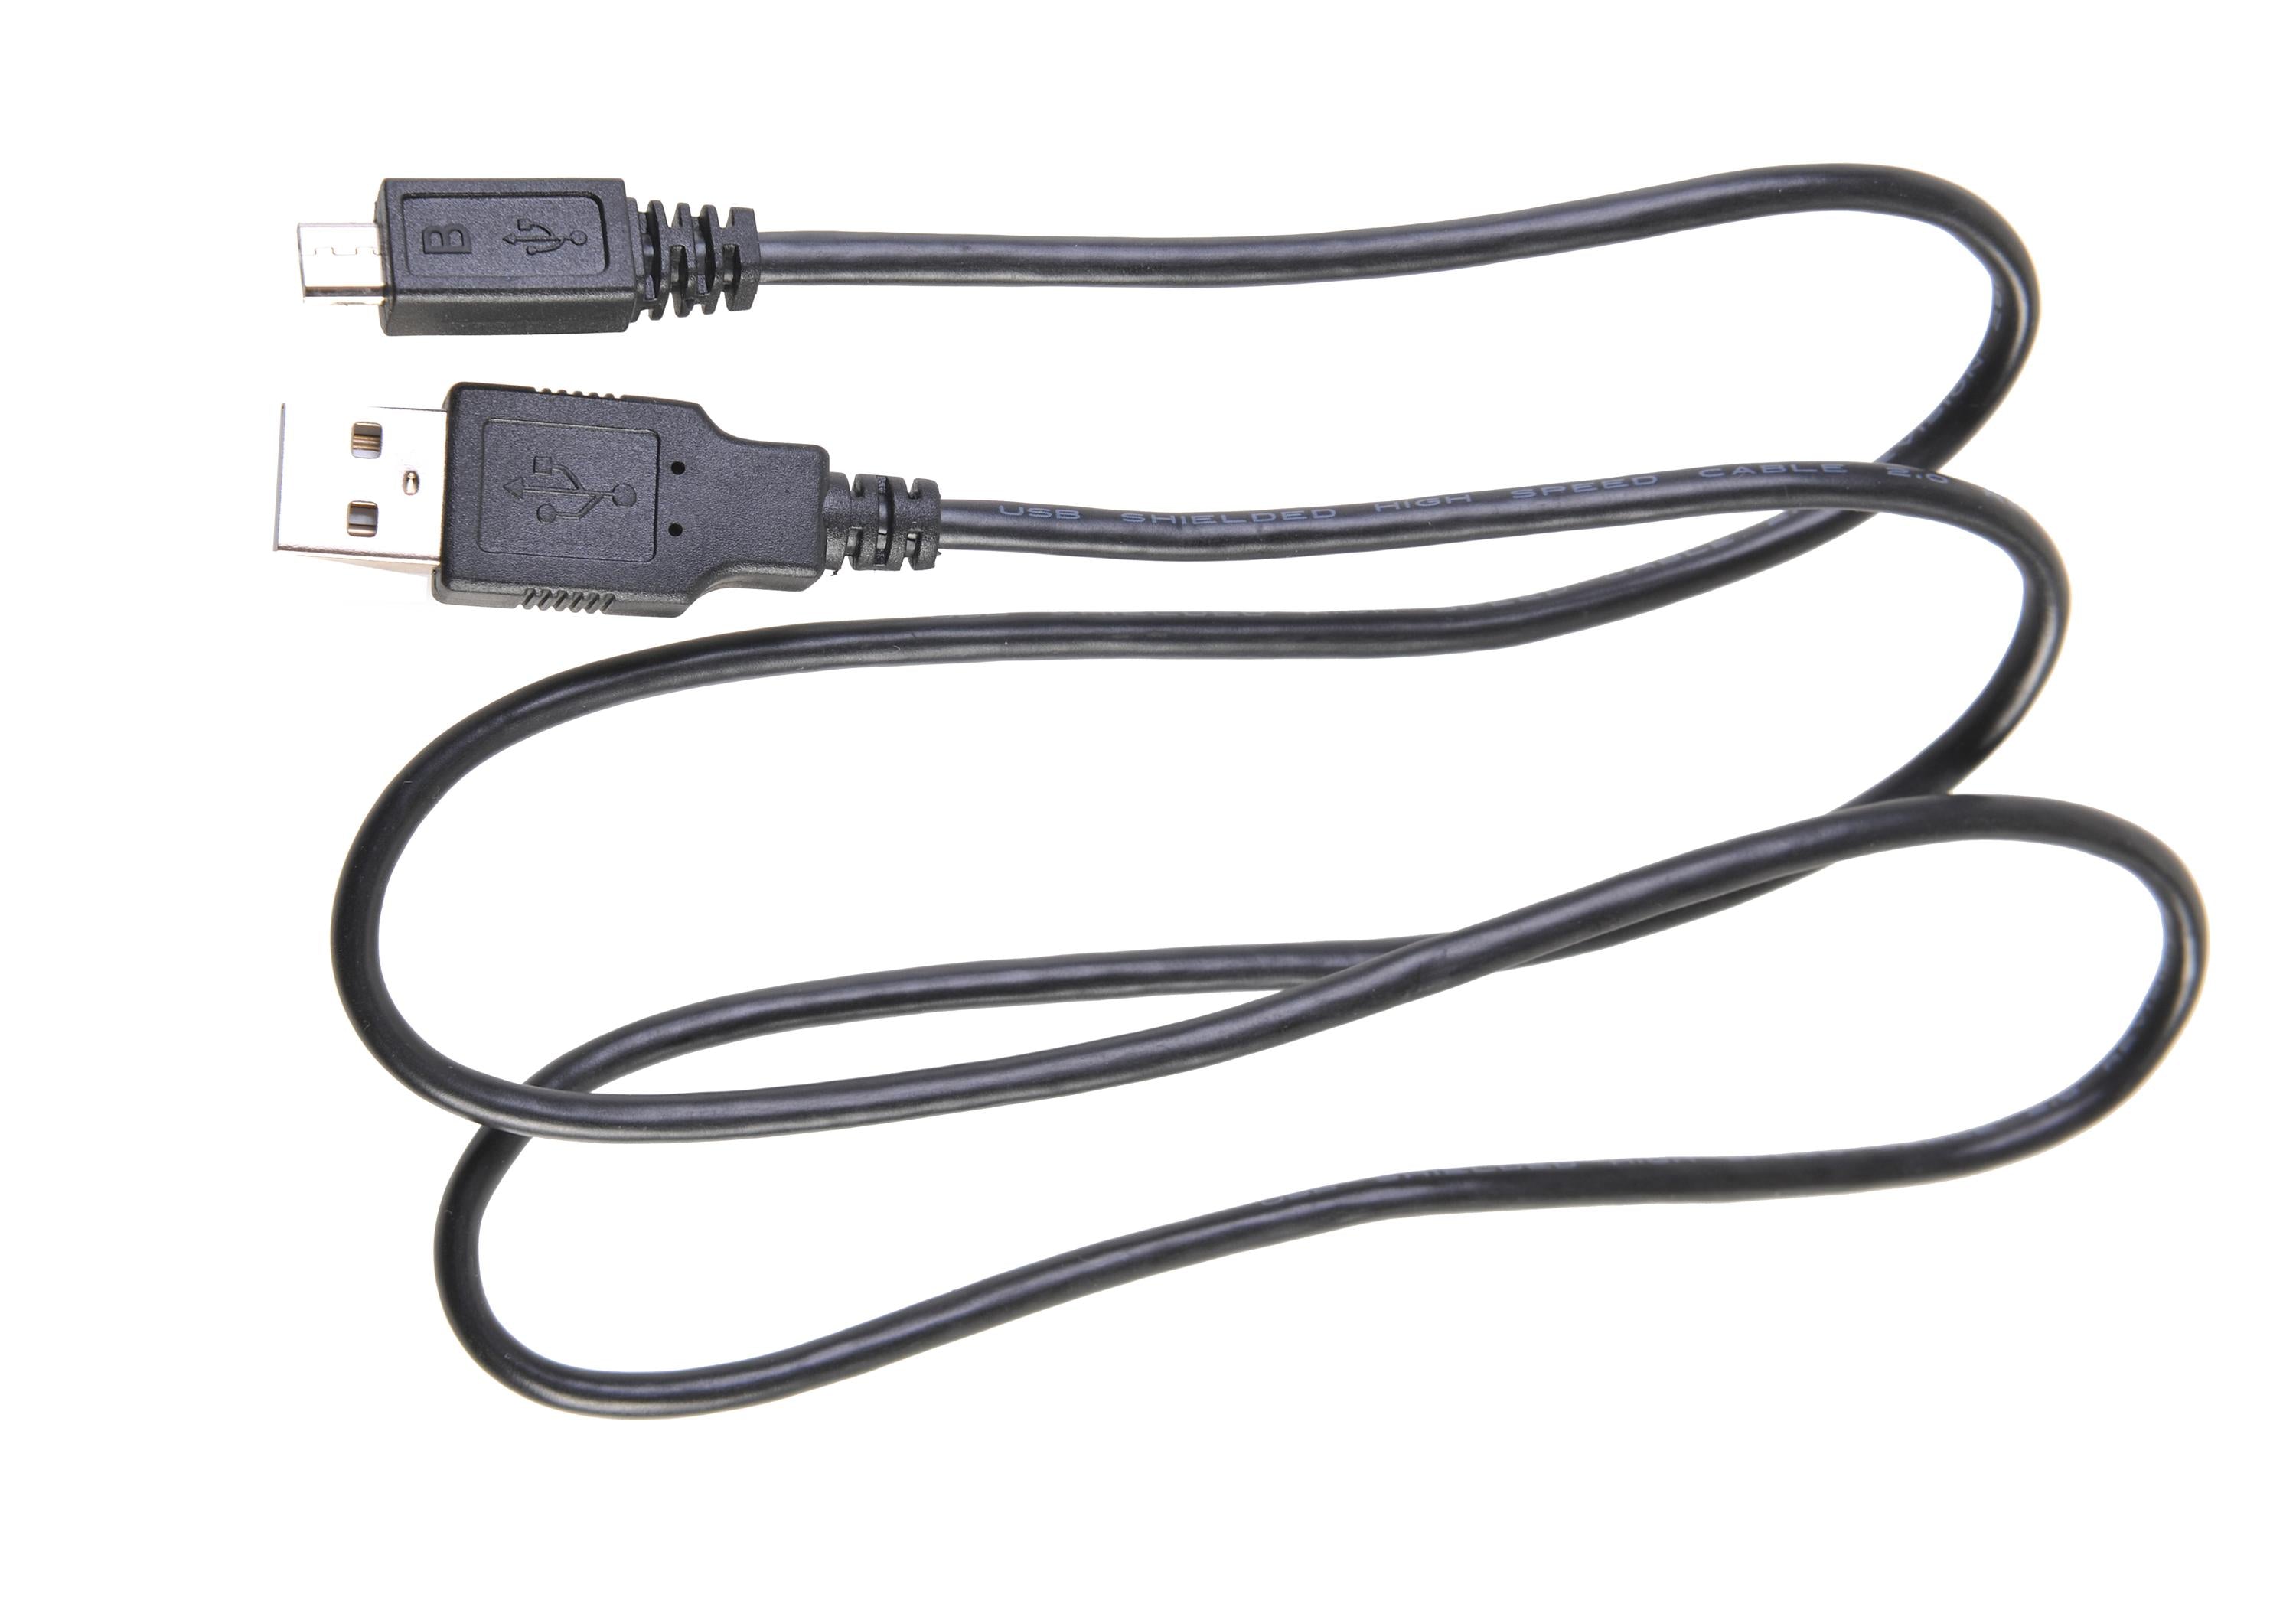 Inmarsat IsatPhone Pro & 2 USB Data Cable